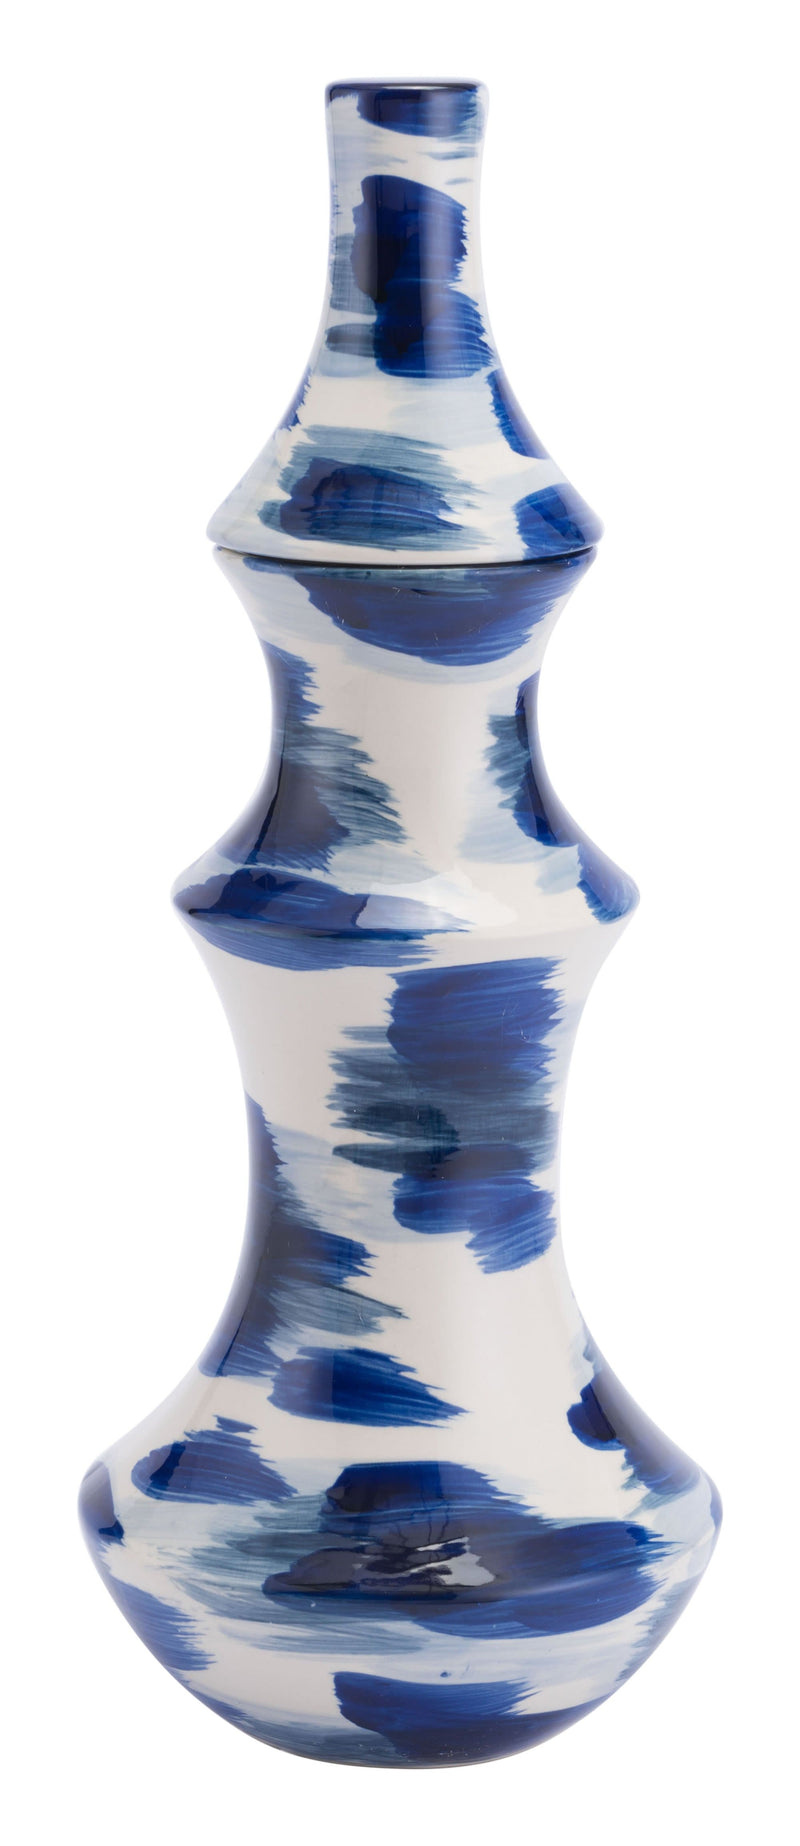 Home Decor Decorative Jars - 8.7" x 8.7" x 21.3" Blue & White, Ceramic, Large Jar HomeRoots